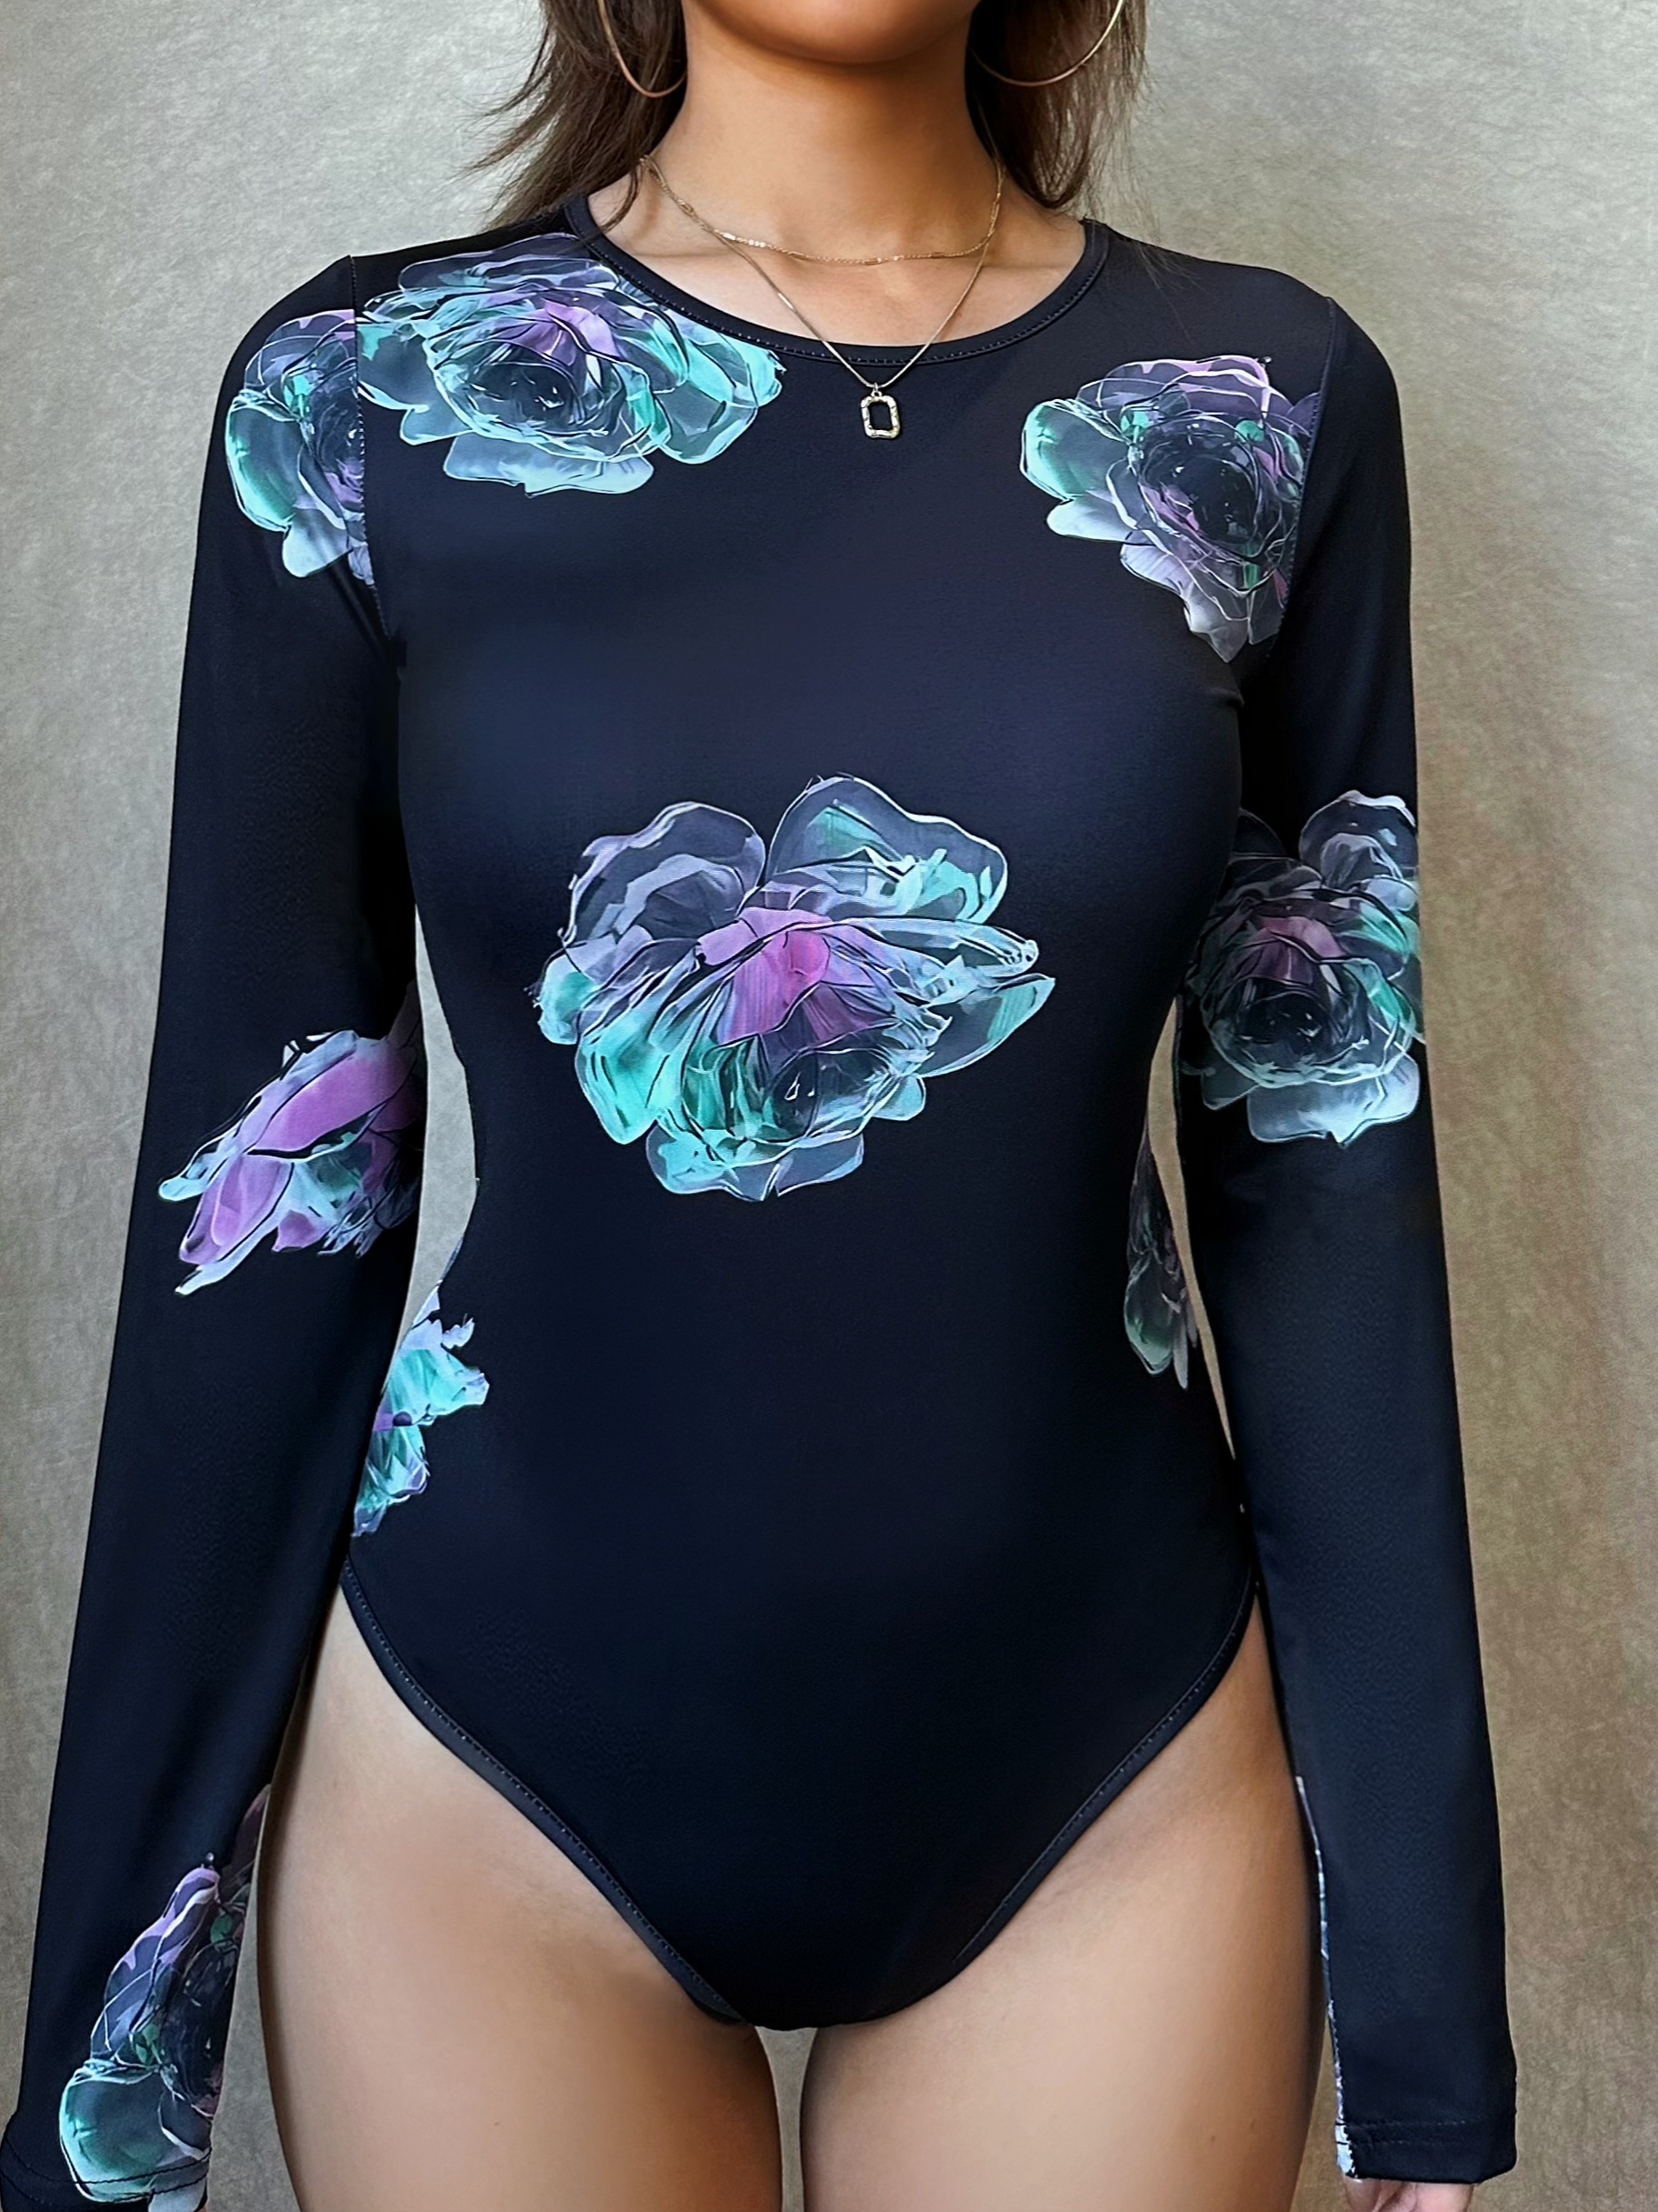  Floral Bodysuit For Women